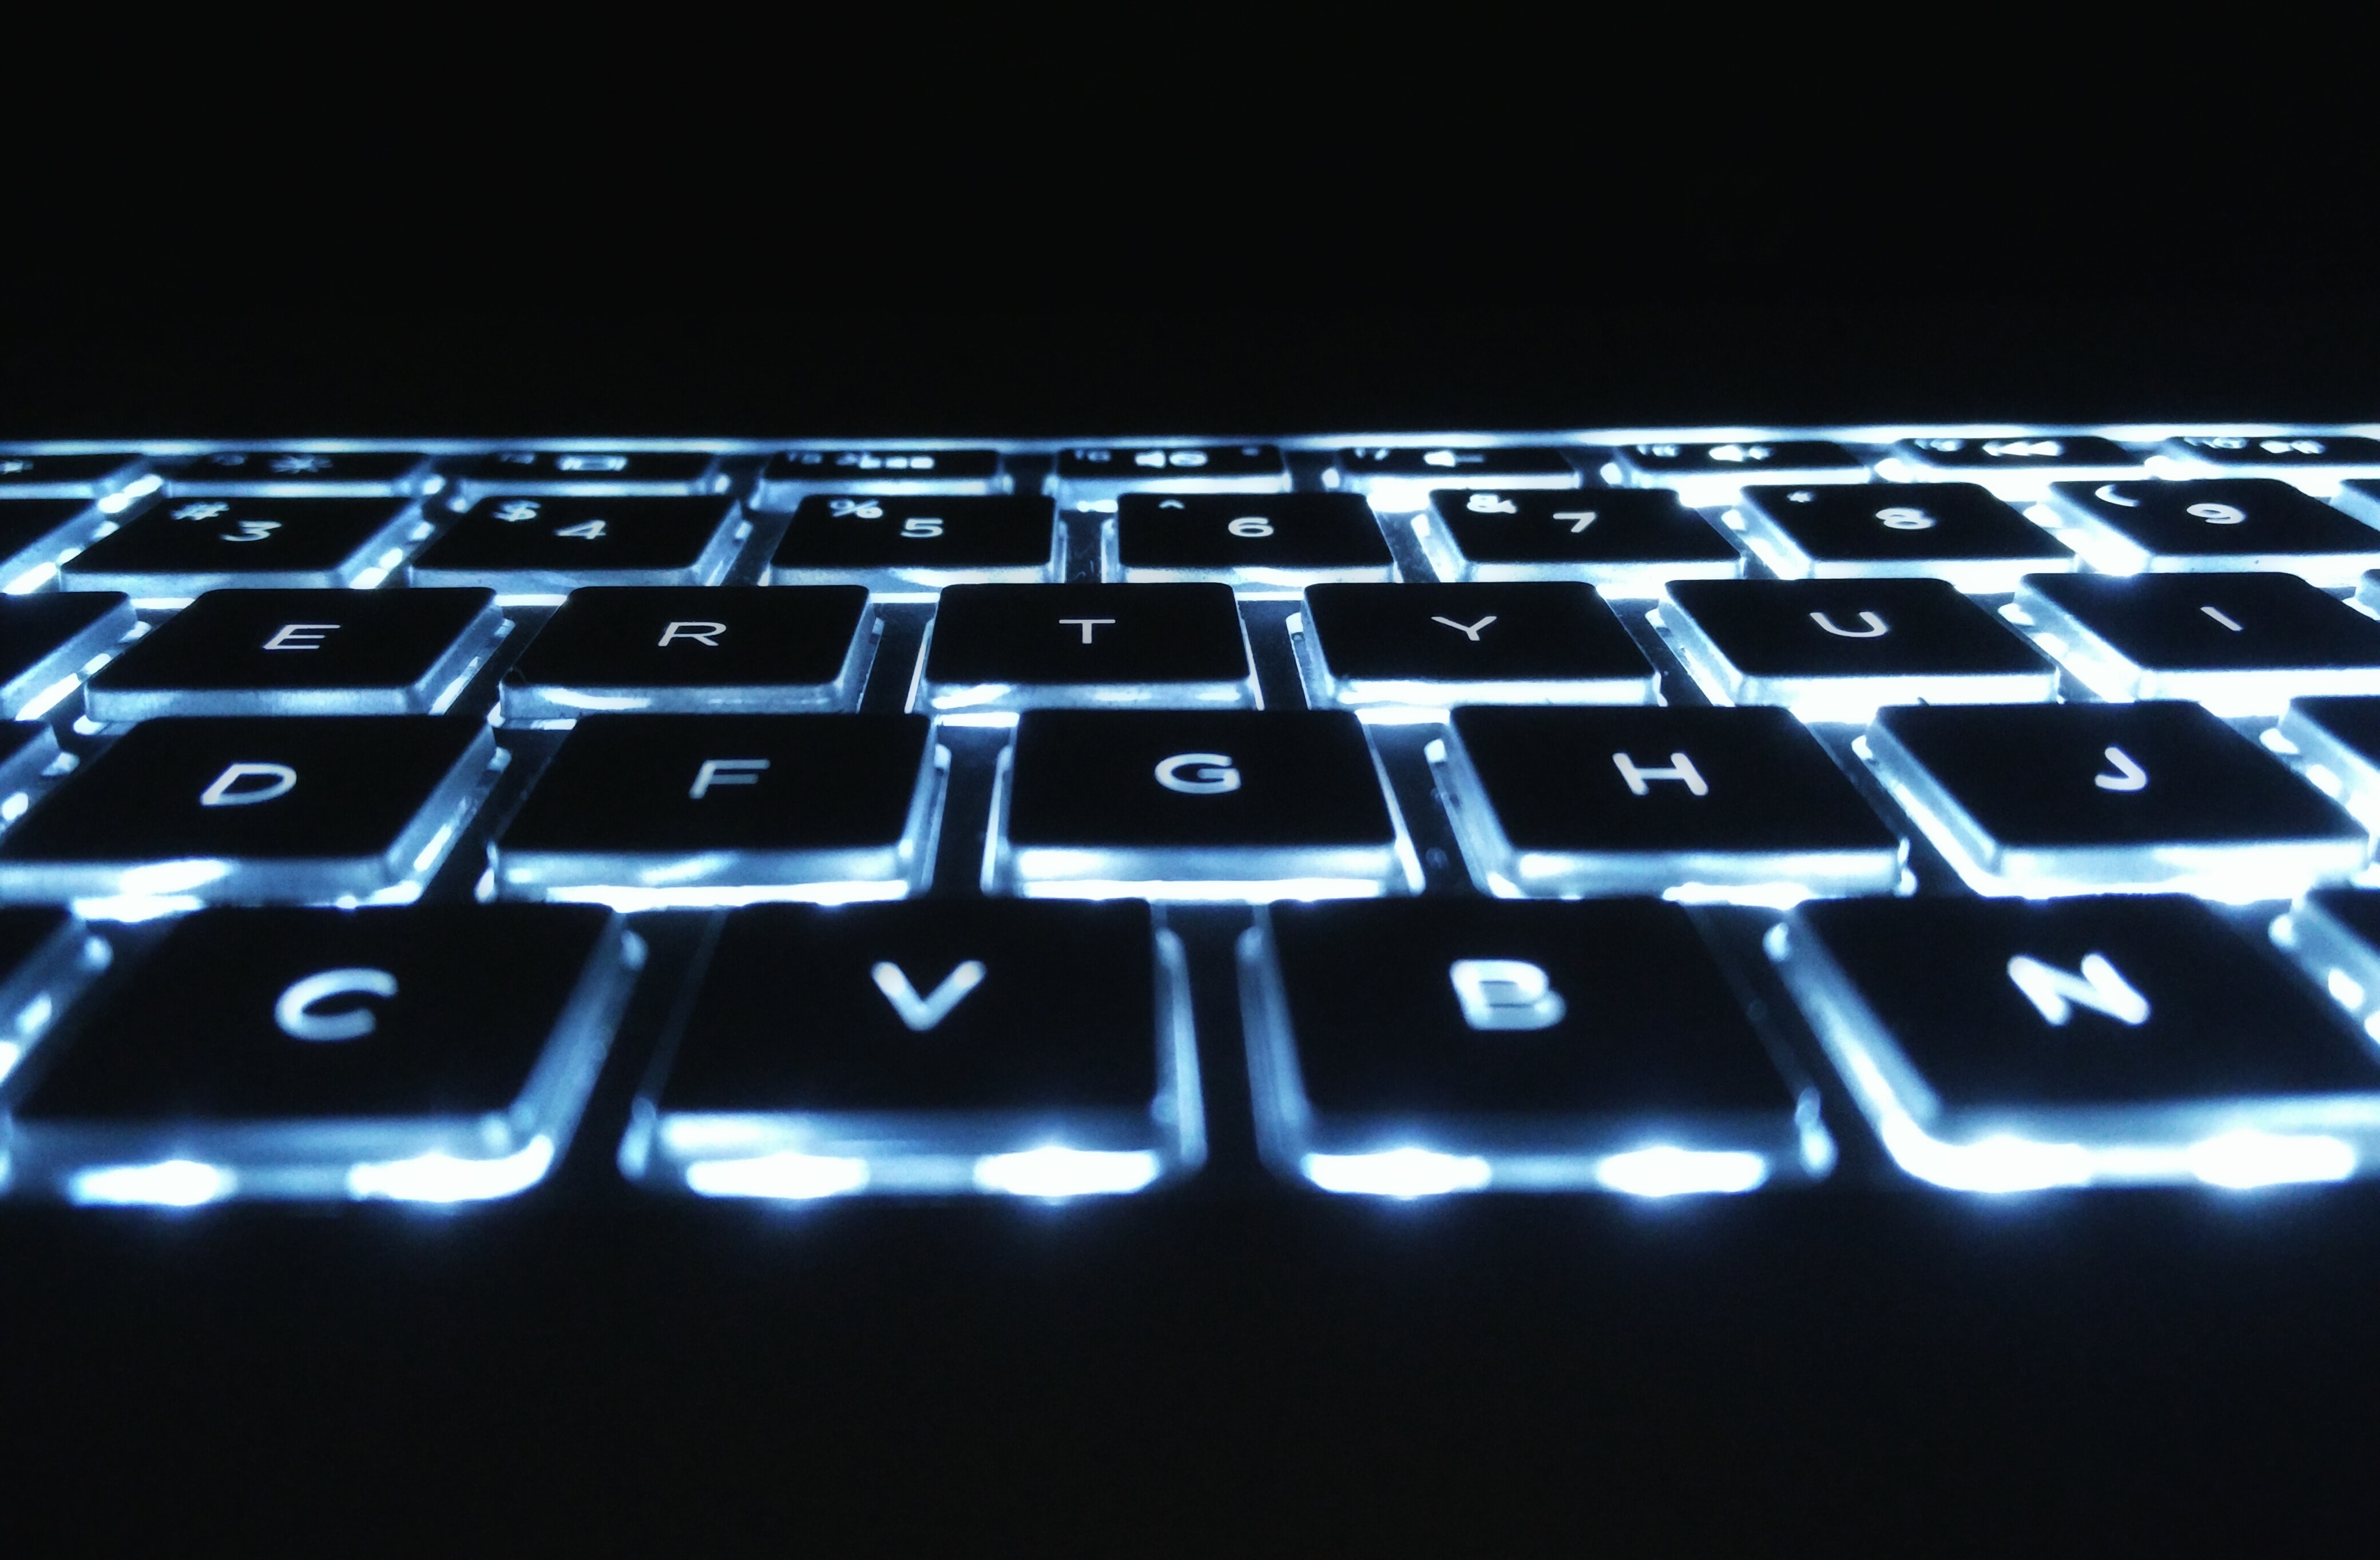 Keyboard lights photo